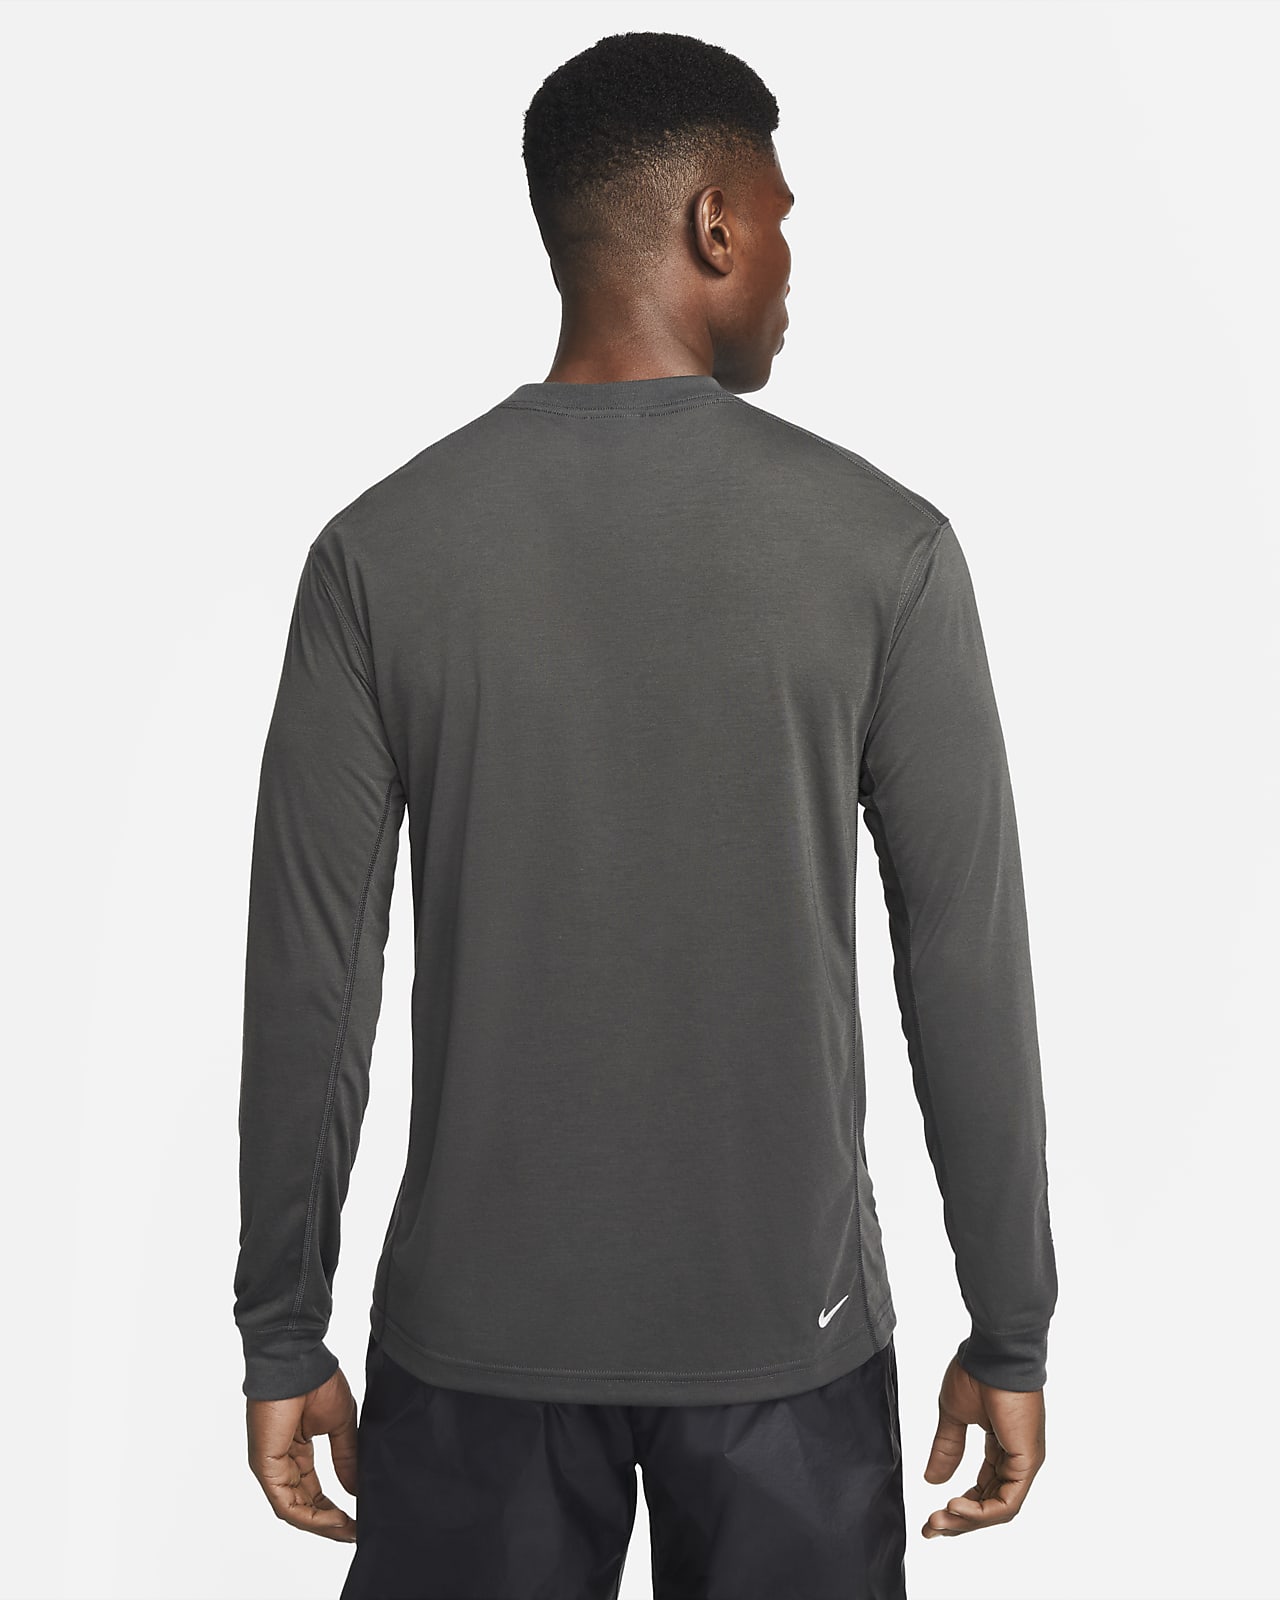 Nike Dri-FIT ACG 'Goat Rocks' Men's Long-Sleeve Top. Nike CZ